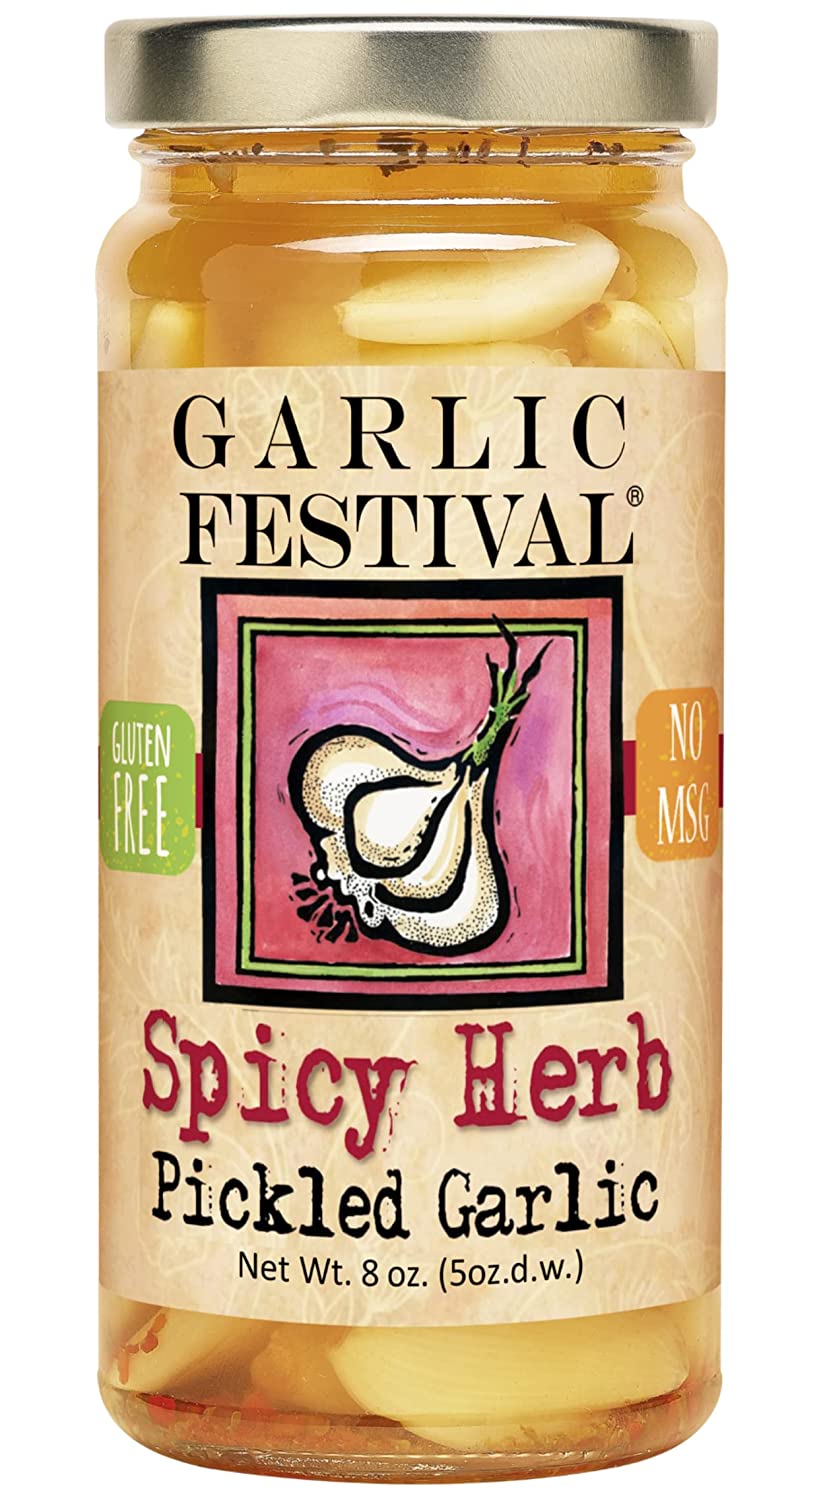 Pickled Garlic Spicy Herb Garlic Festival Foods 8 oz $9.98